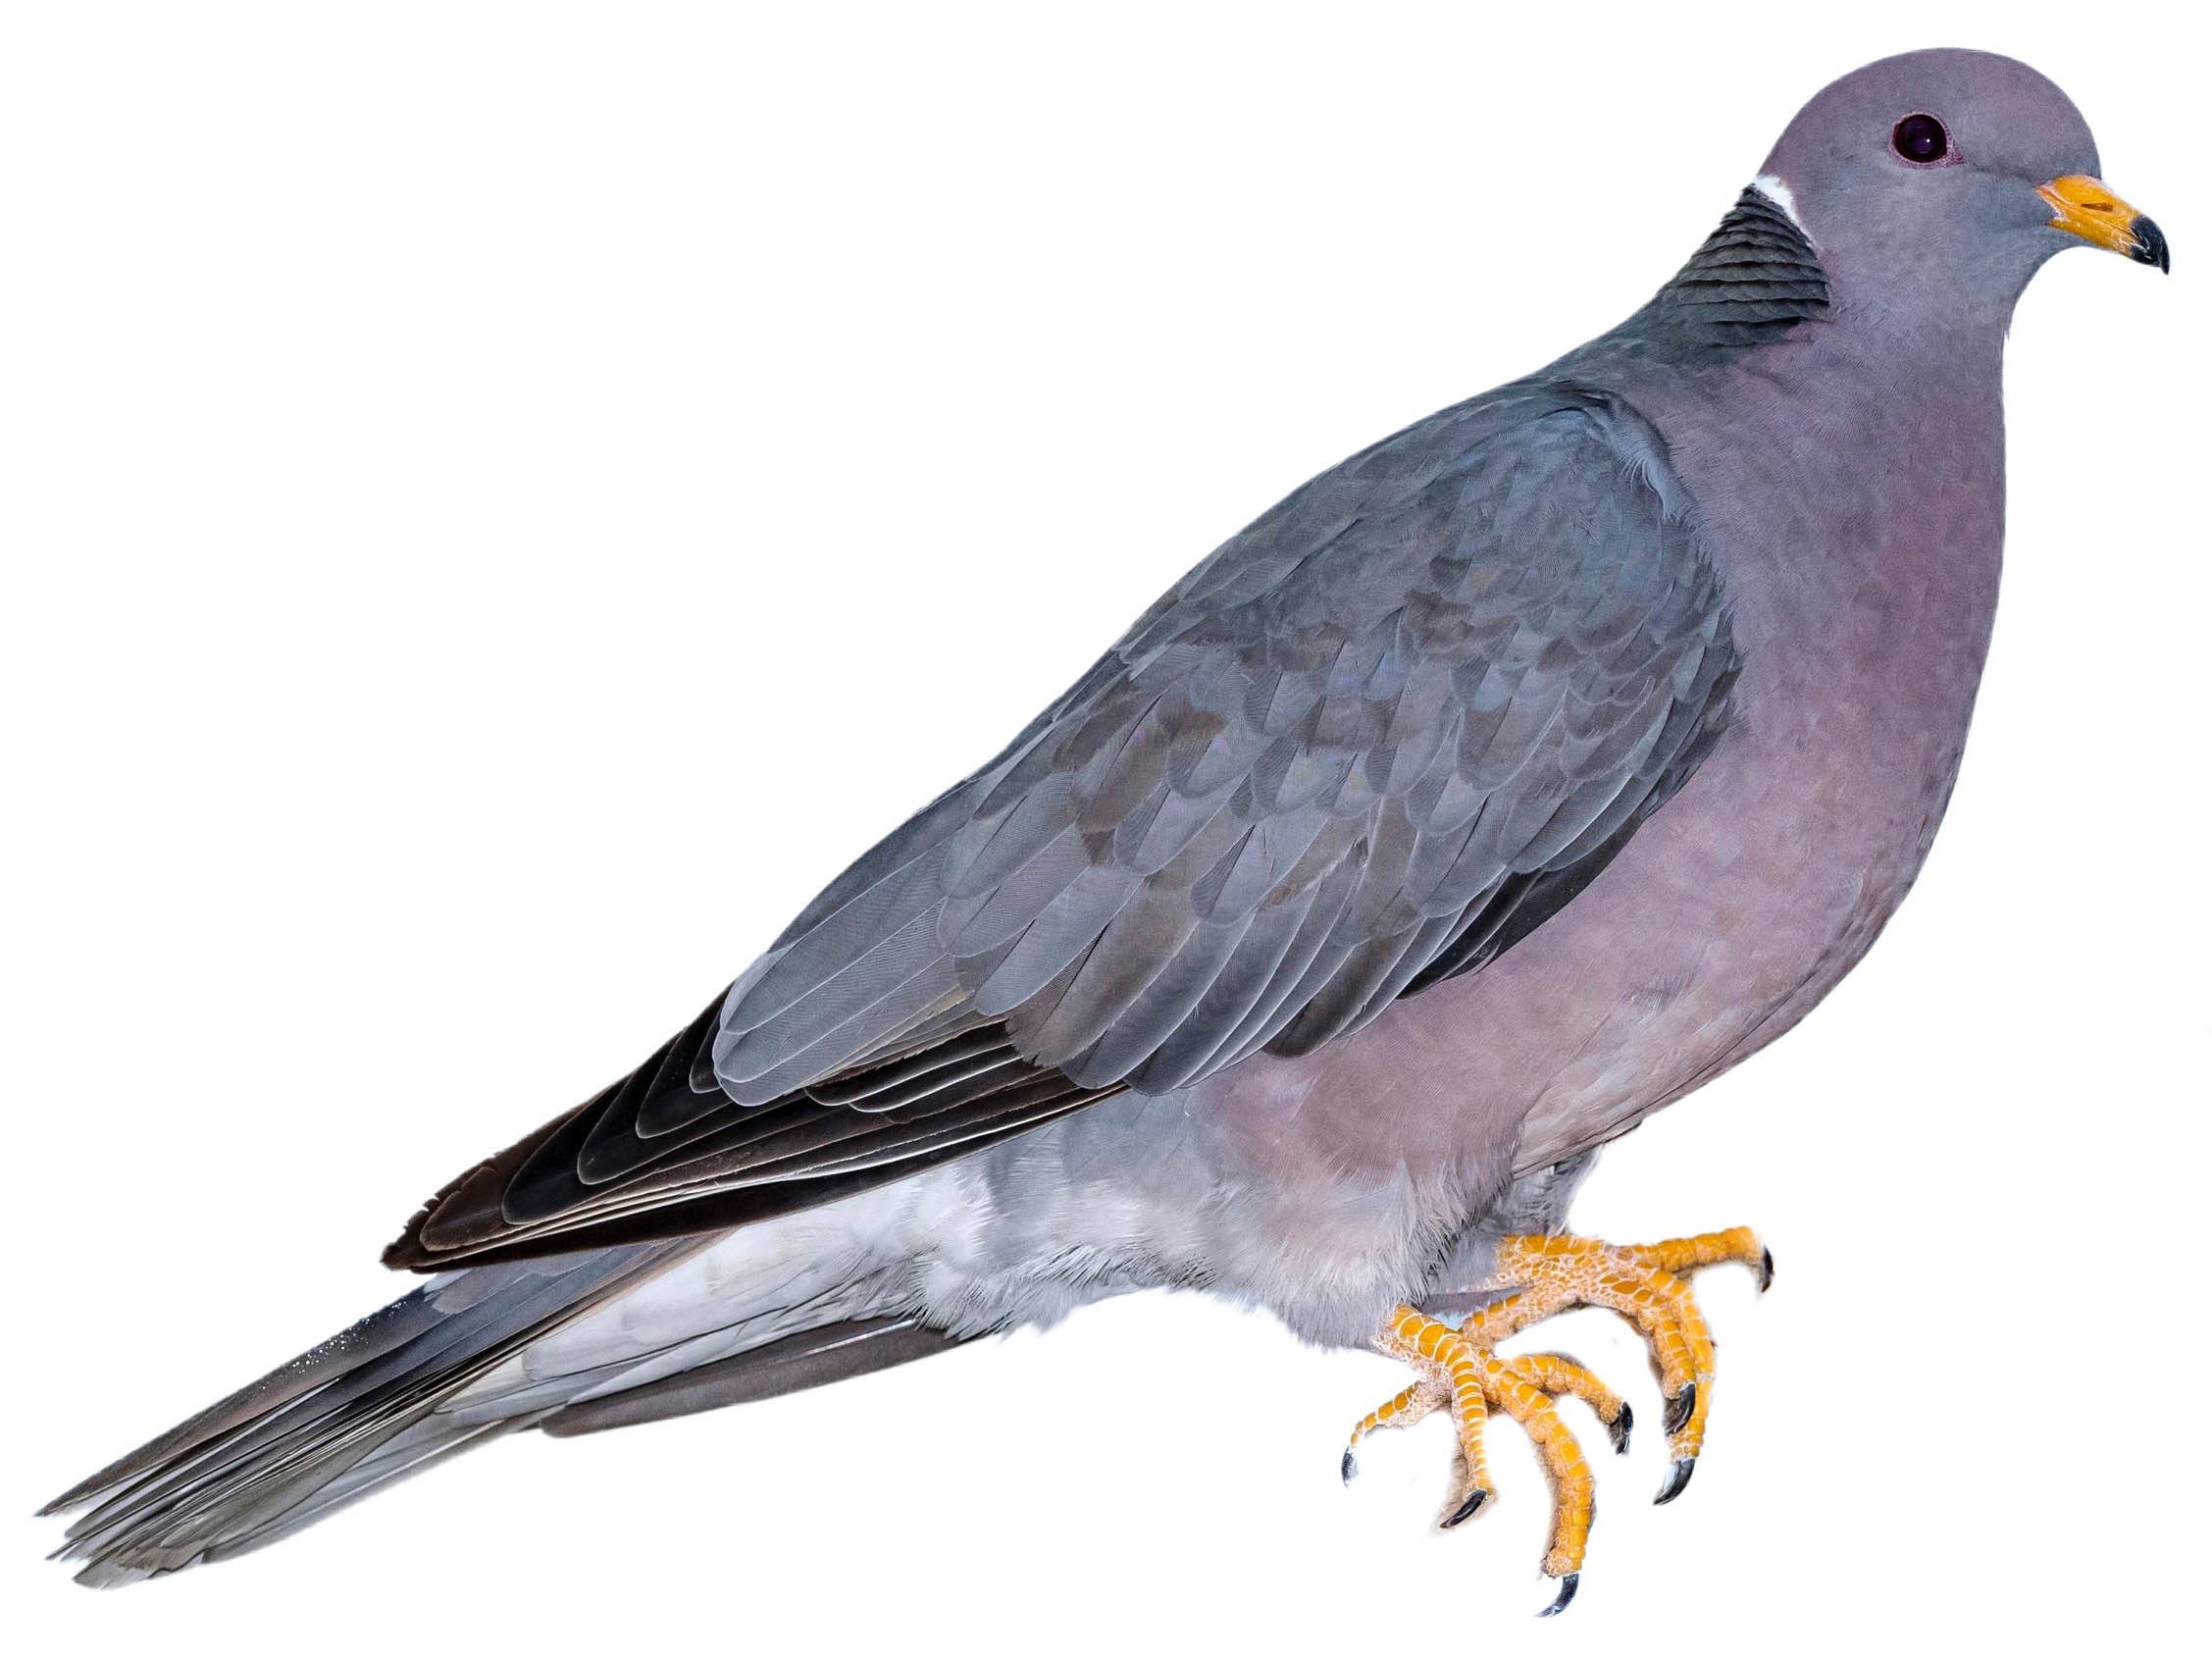 A photo of a Band-tailed Pigeon (Patagioenas fasciata)